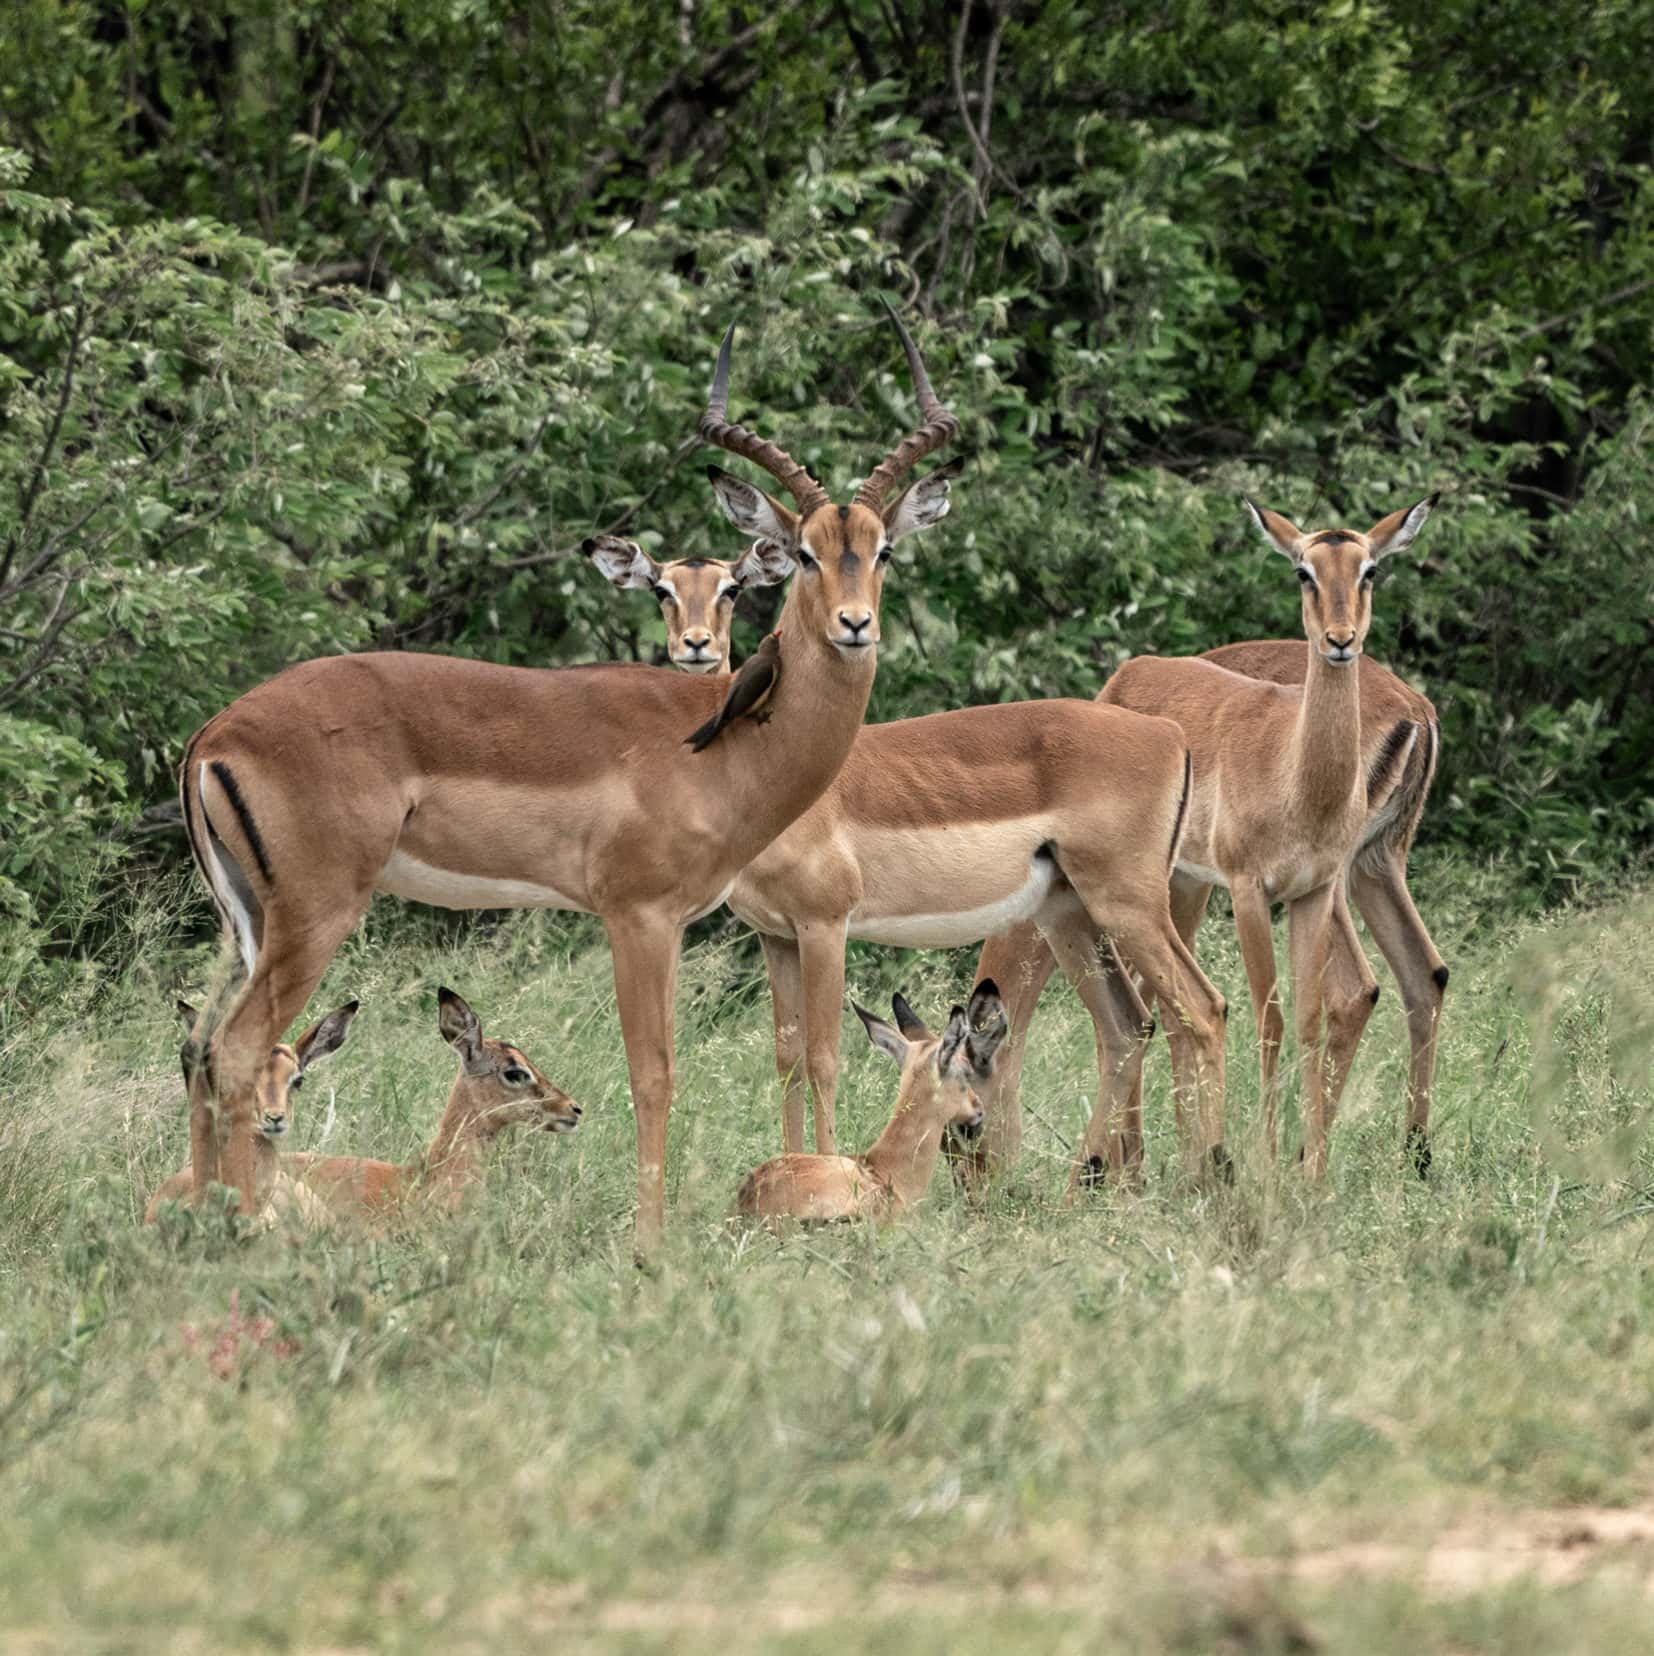 Impala herd watch us